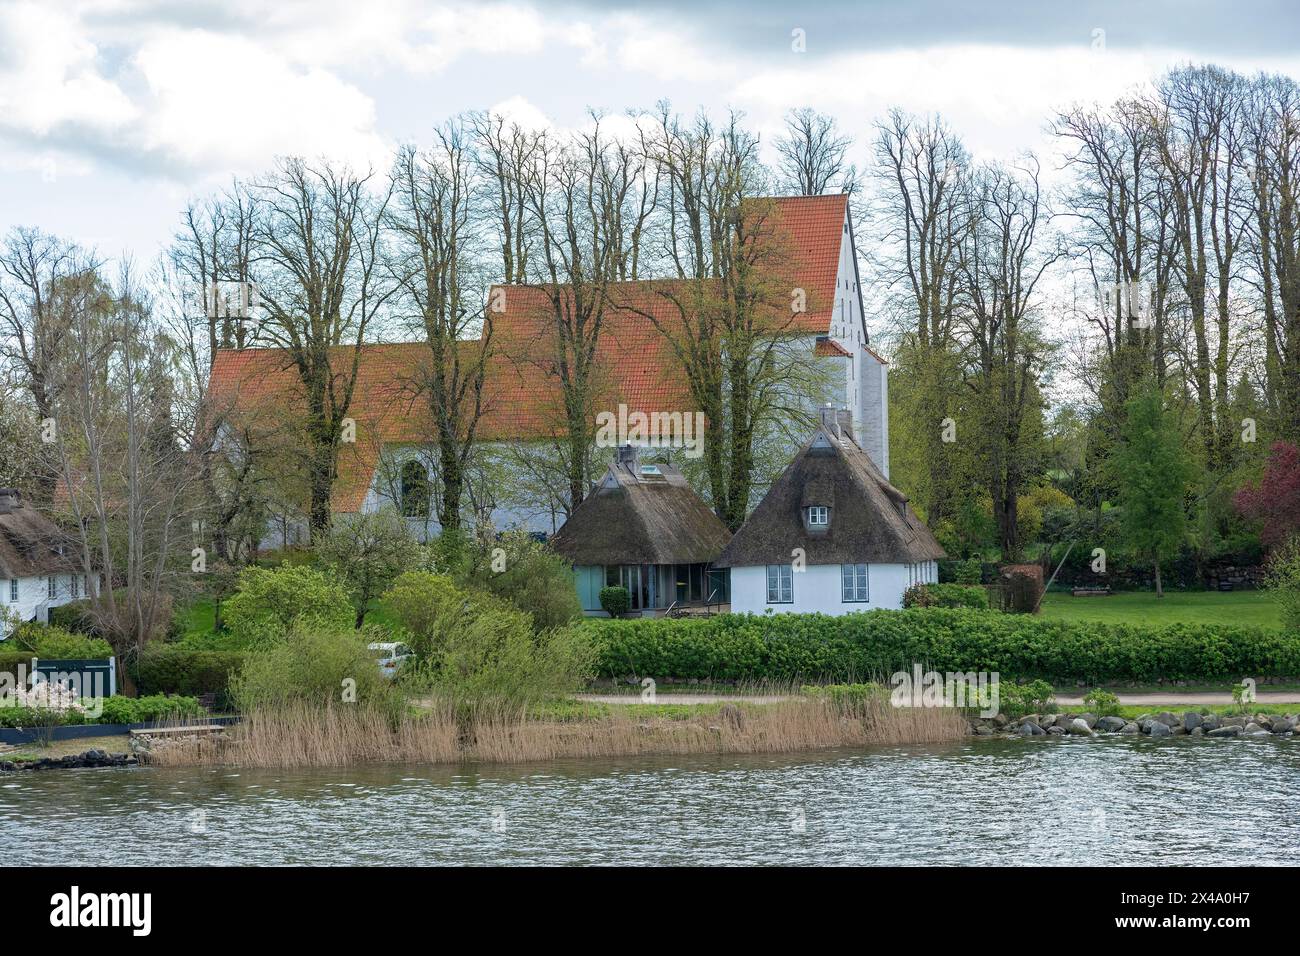 Église, maisons de chaume, arbres, Sieseby, Schlei, Schleswig-Holstein, Allemagne Banque D'Images